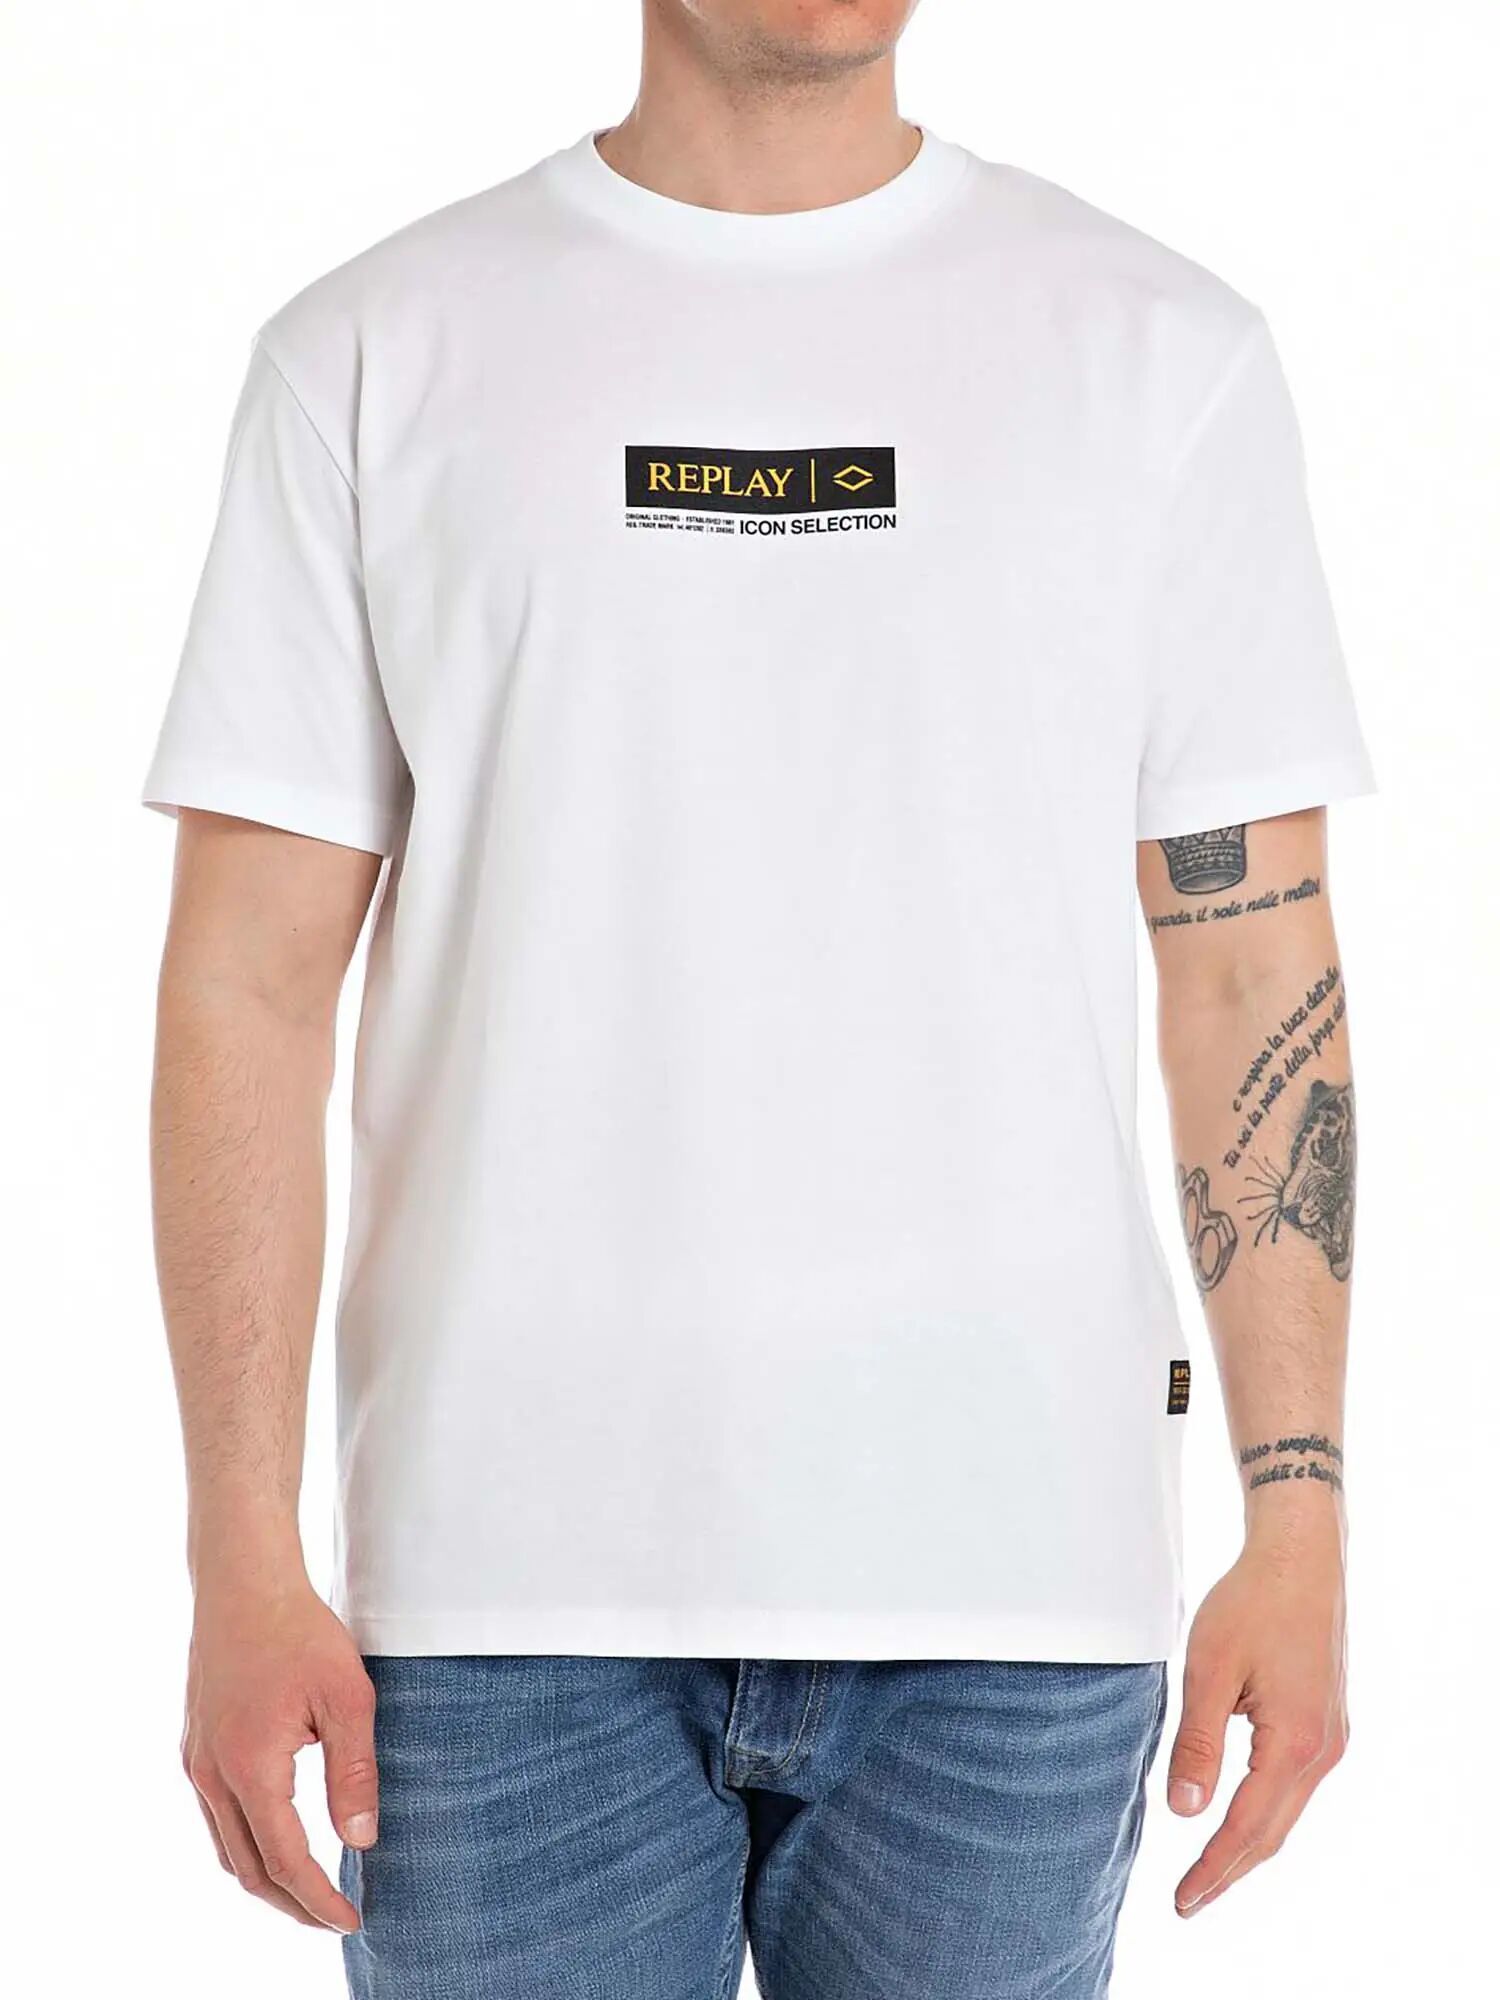 Replay T-shirt Uomo Colore Bianco BIANCO S